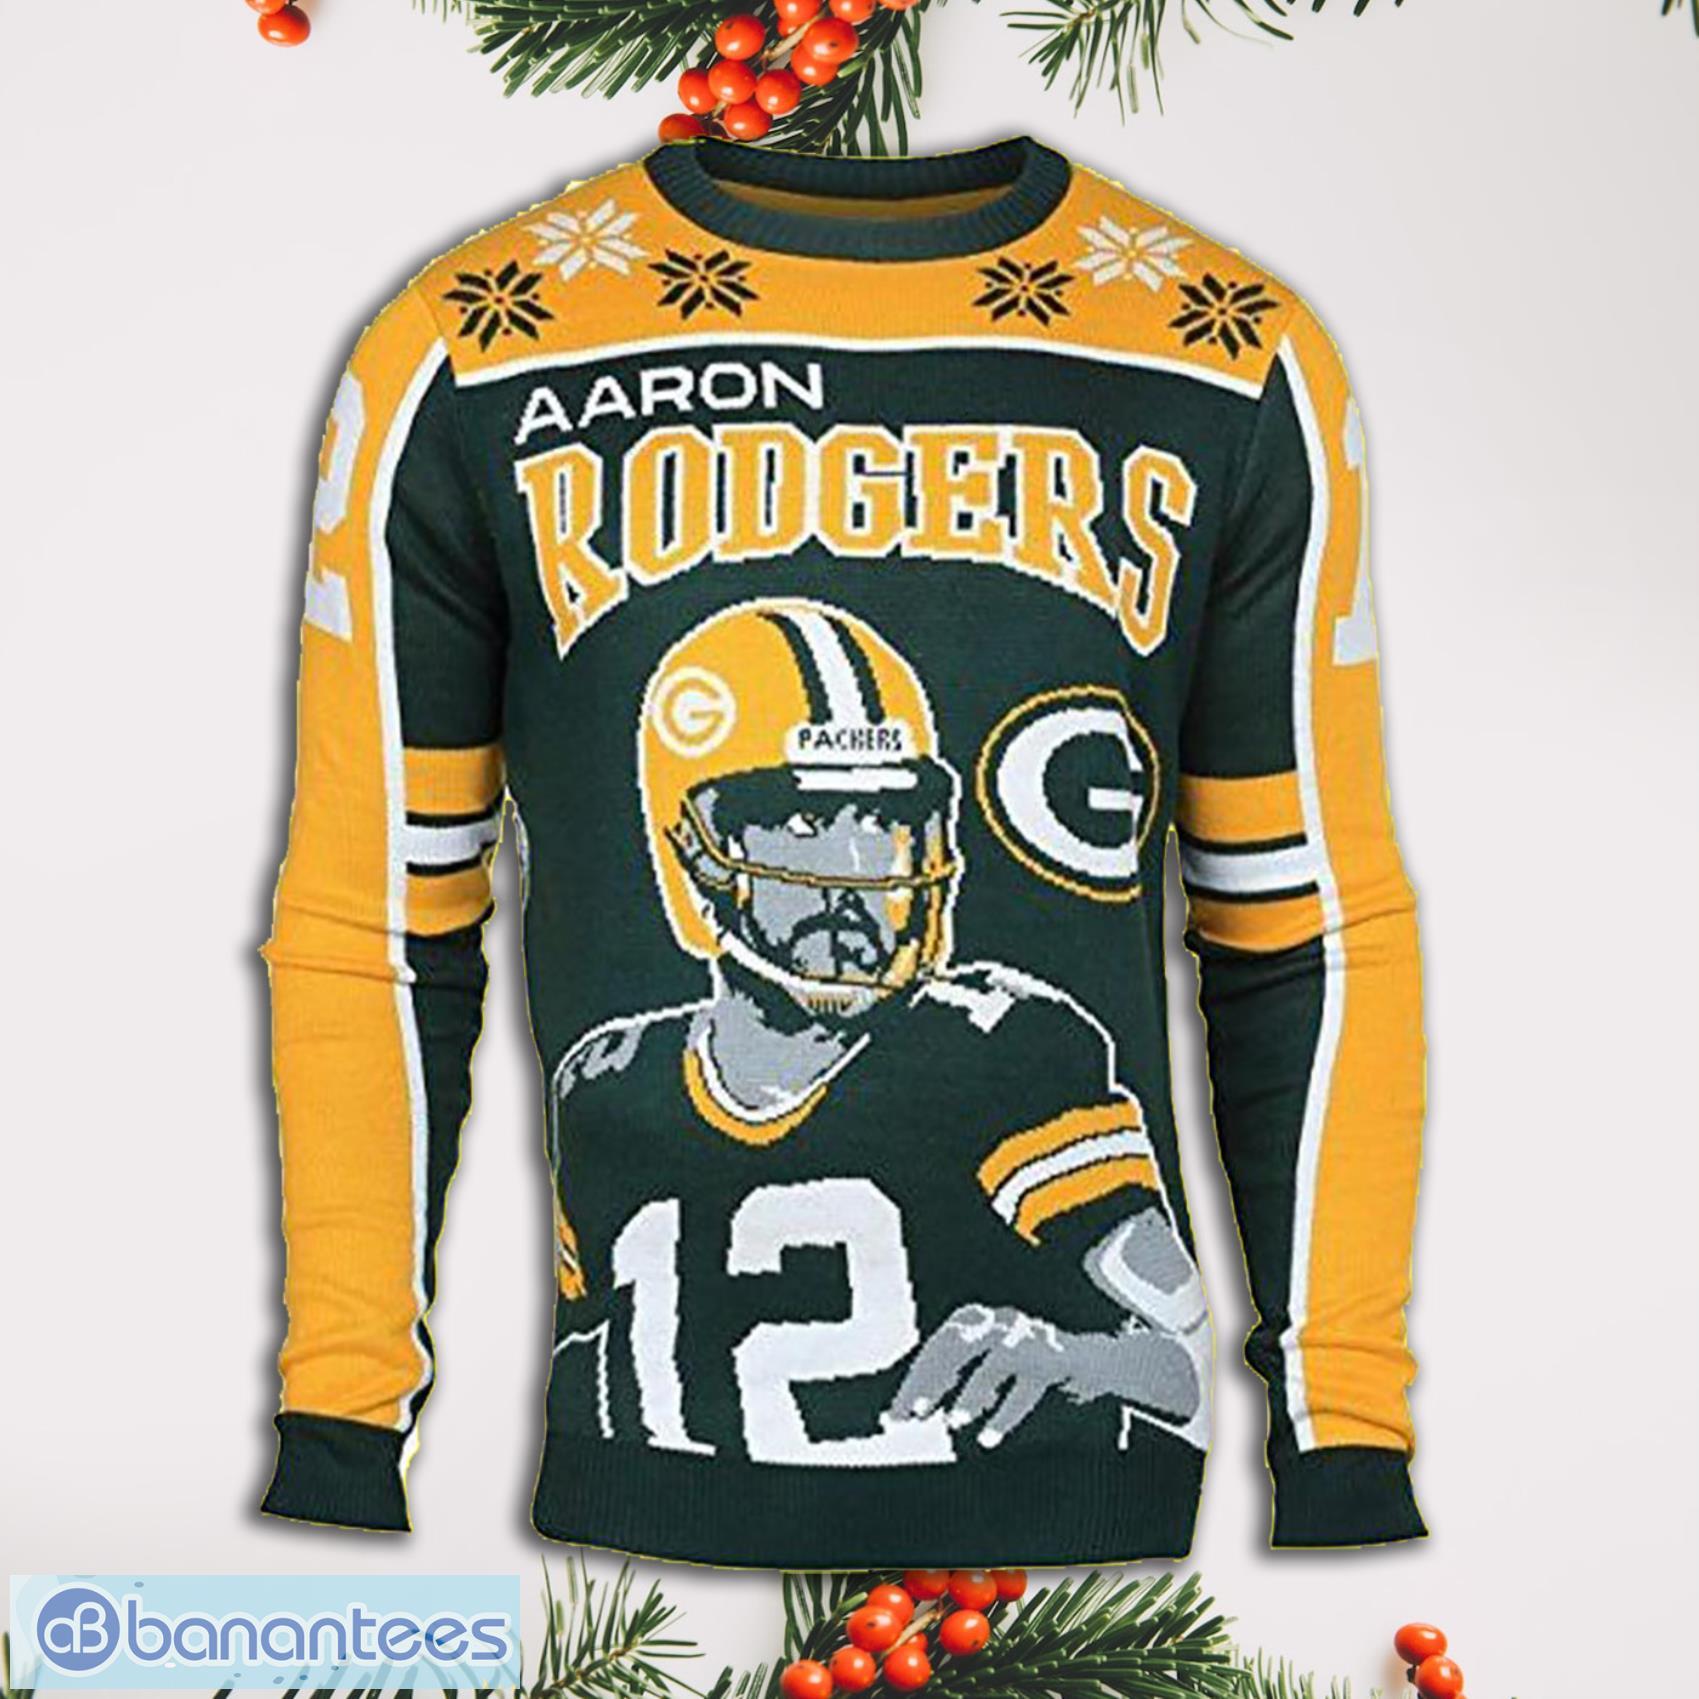 Aaron Green Bay Packers Full Print Ugly Christmas Sweater - Banantees